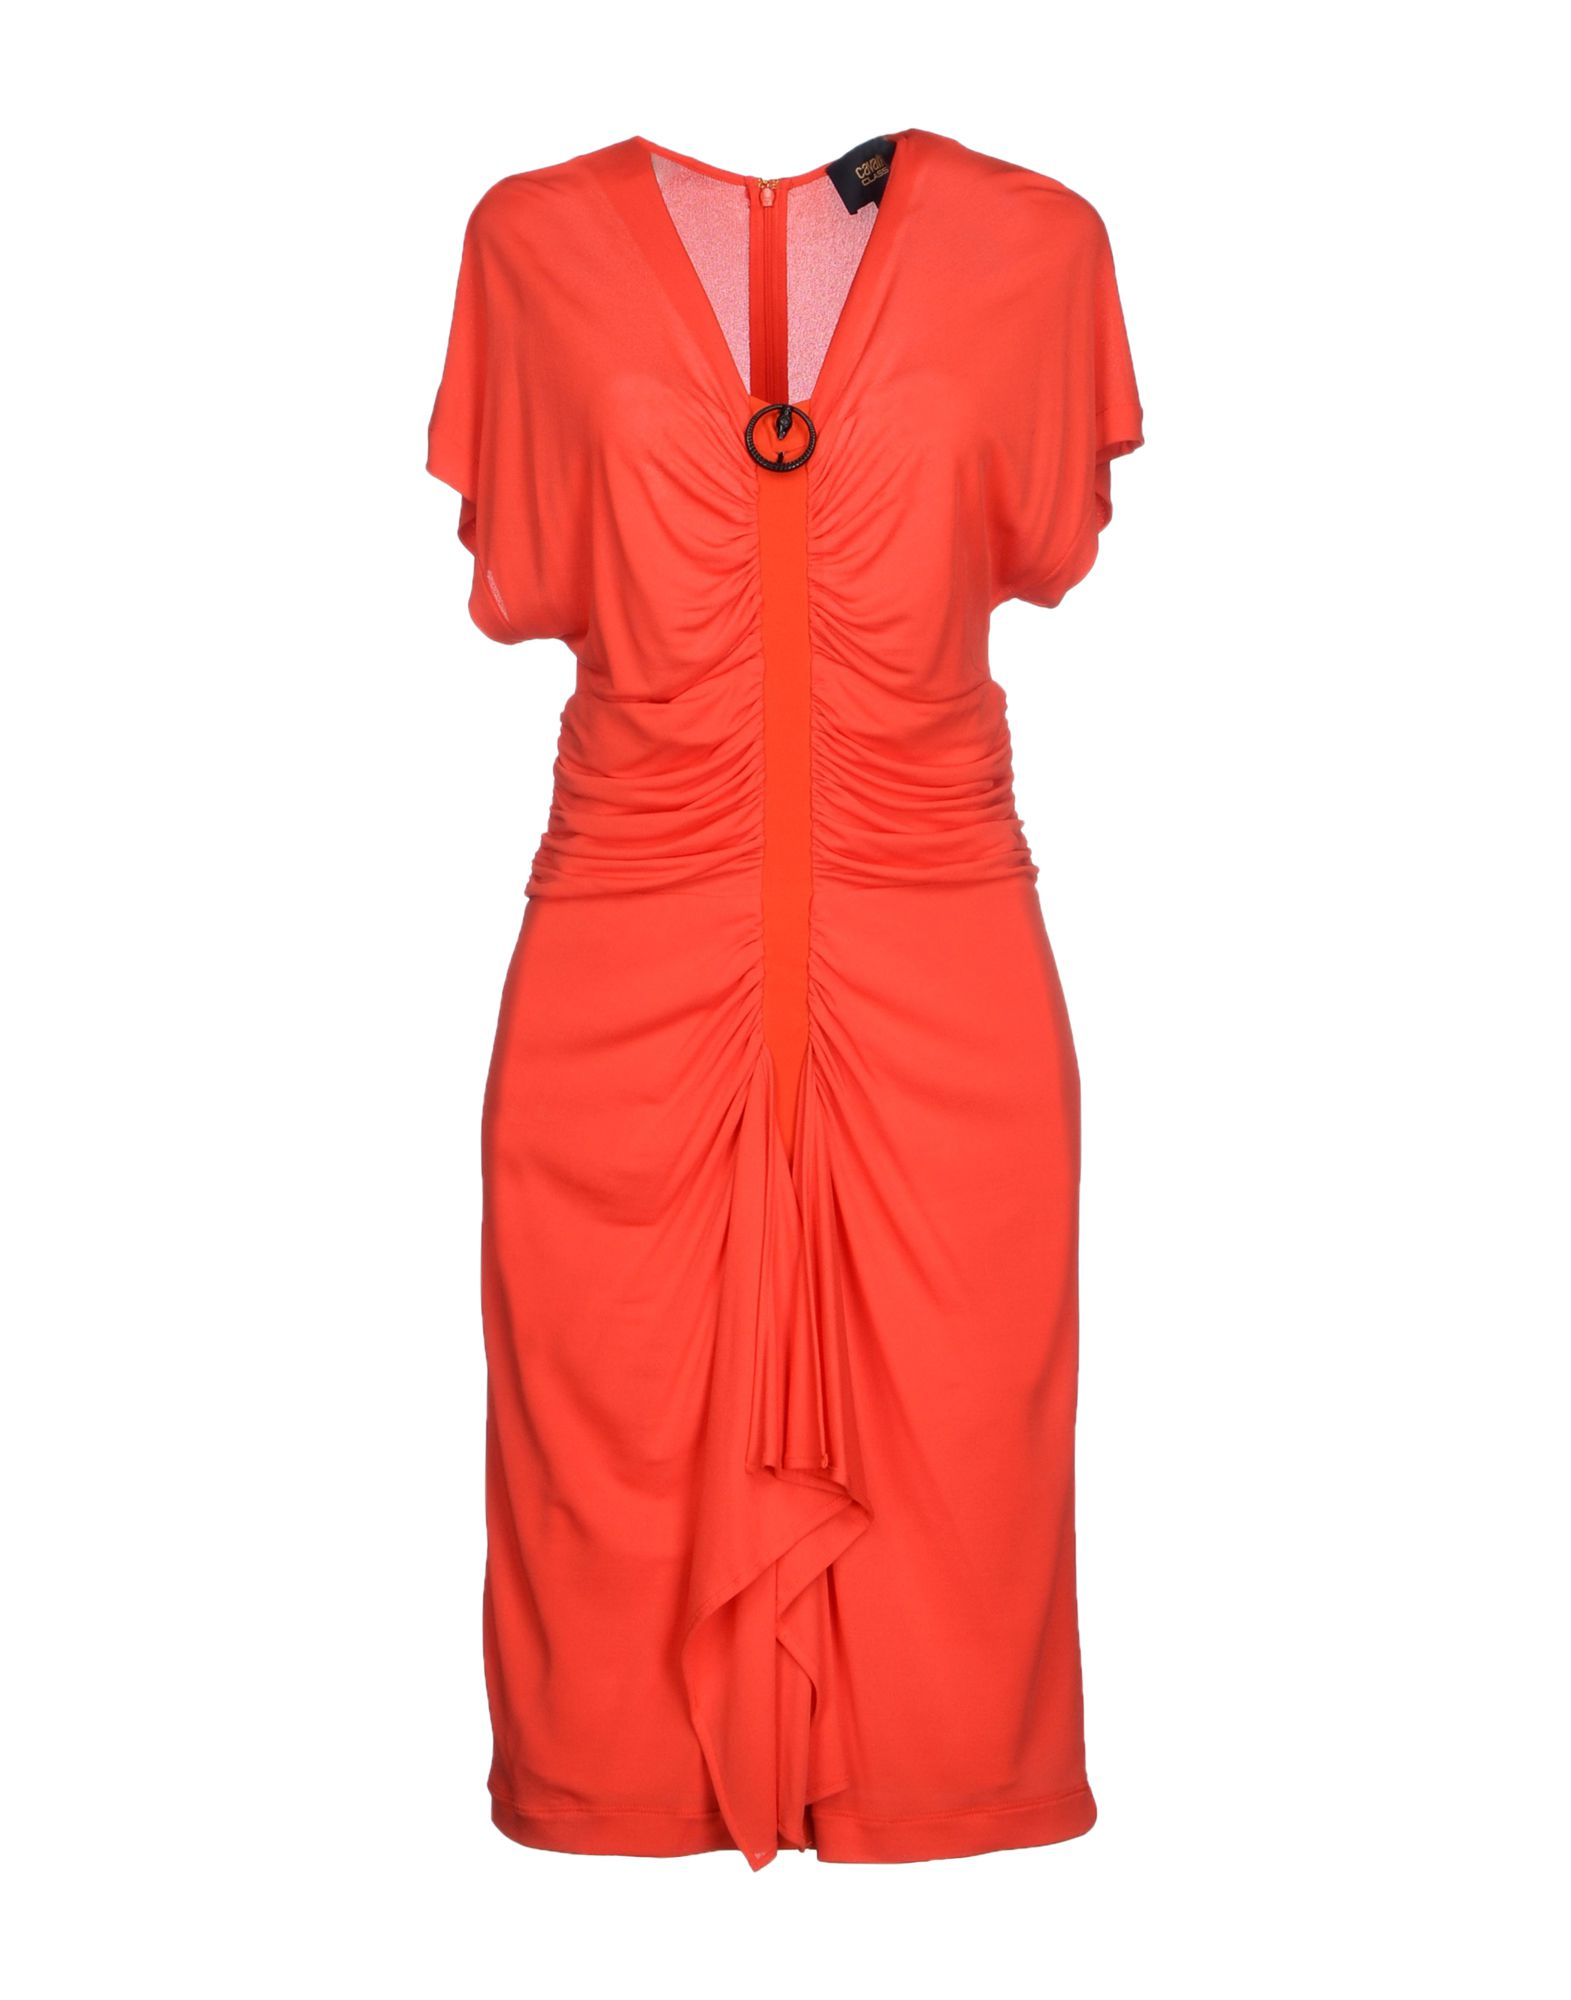 Lyst - Class Roberto Cavalli Knee-length Dress in Orange